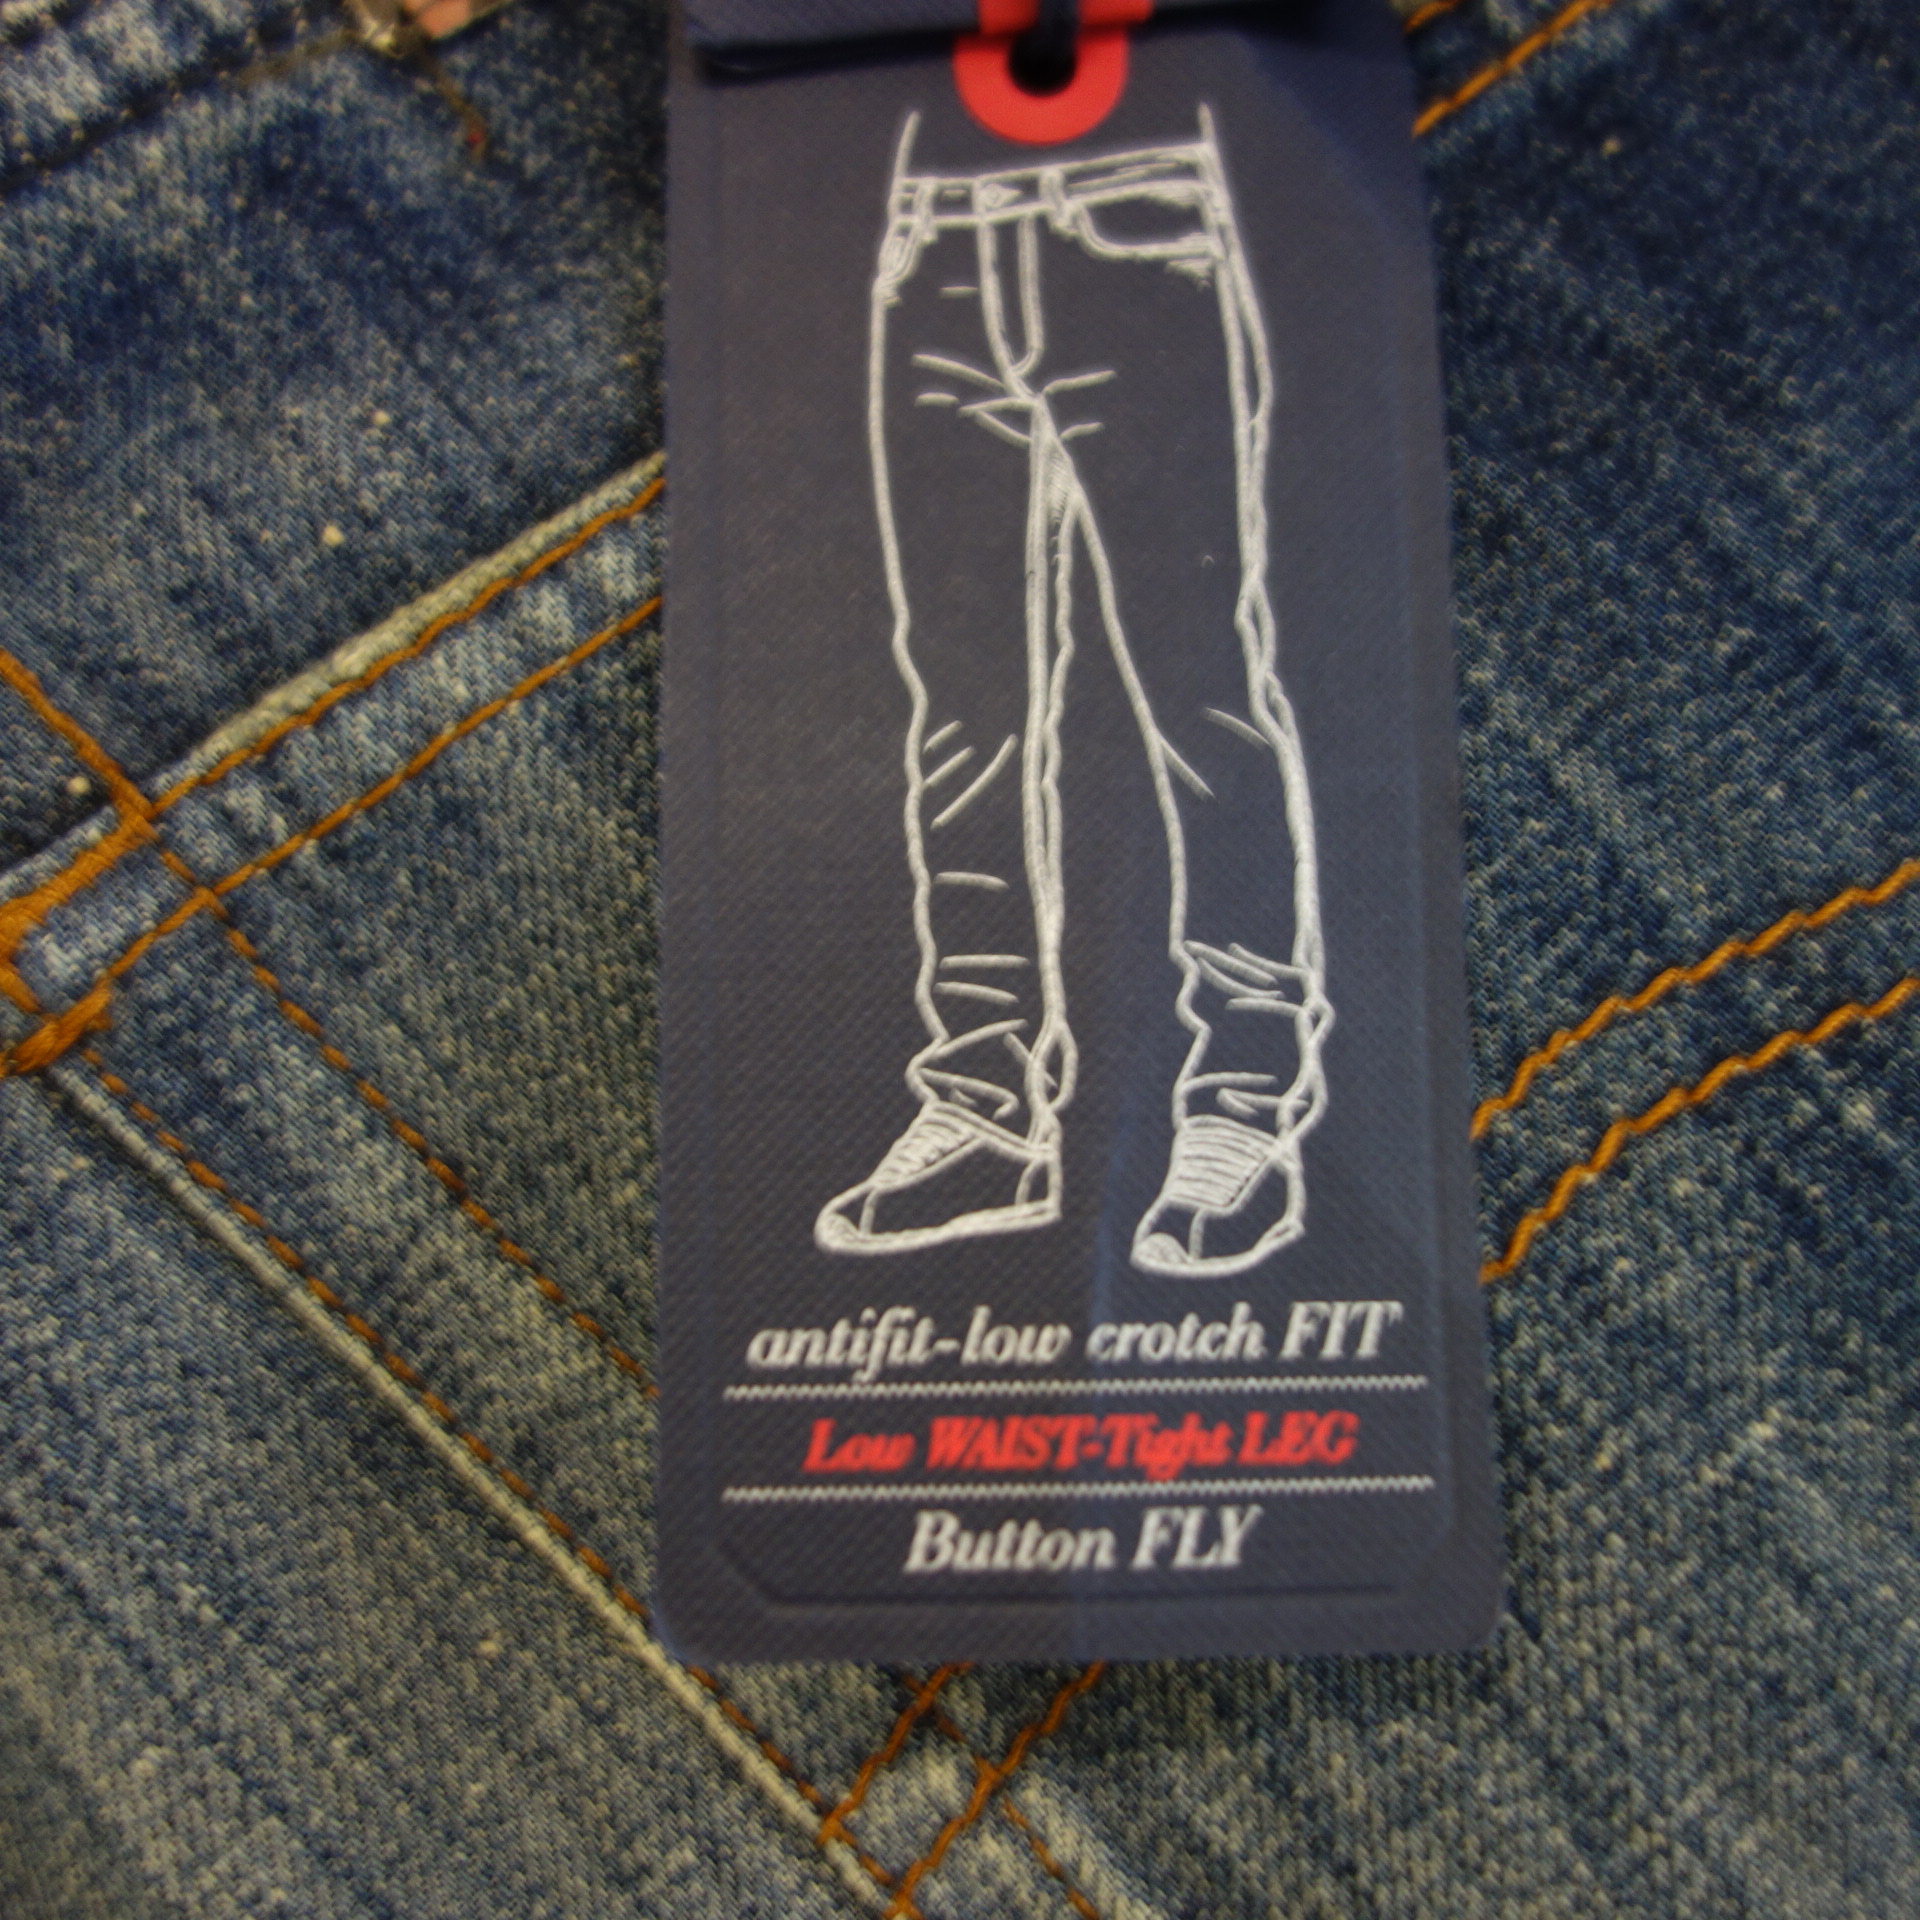 ARMANI JEANS Herren Jeans Hose Jeanshose J27 Blau Antifit Low Waist Tight Leg Button